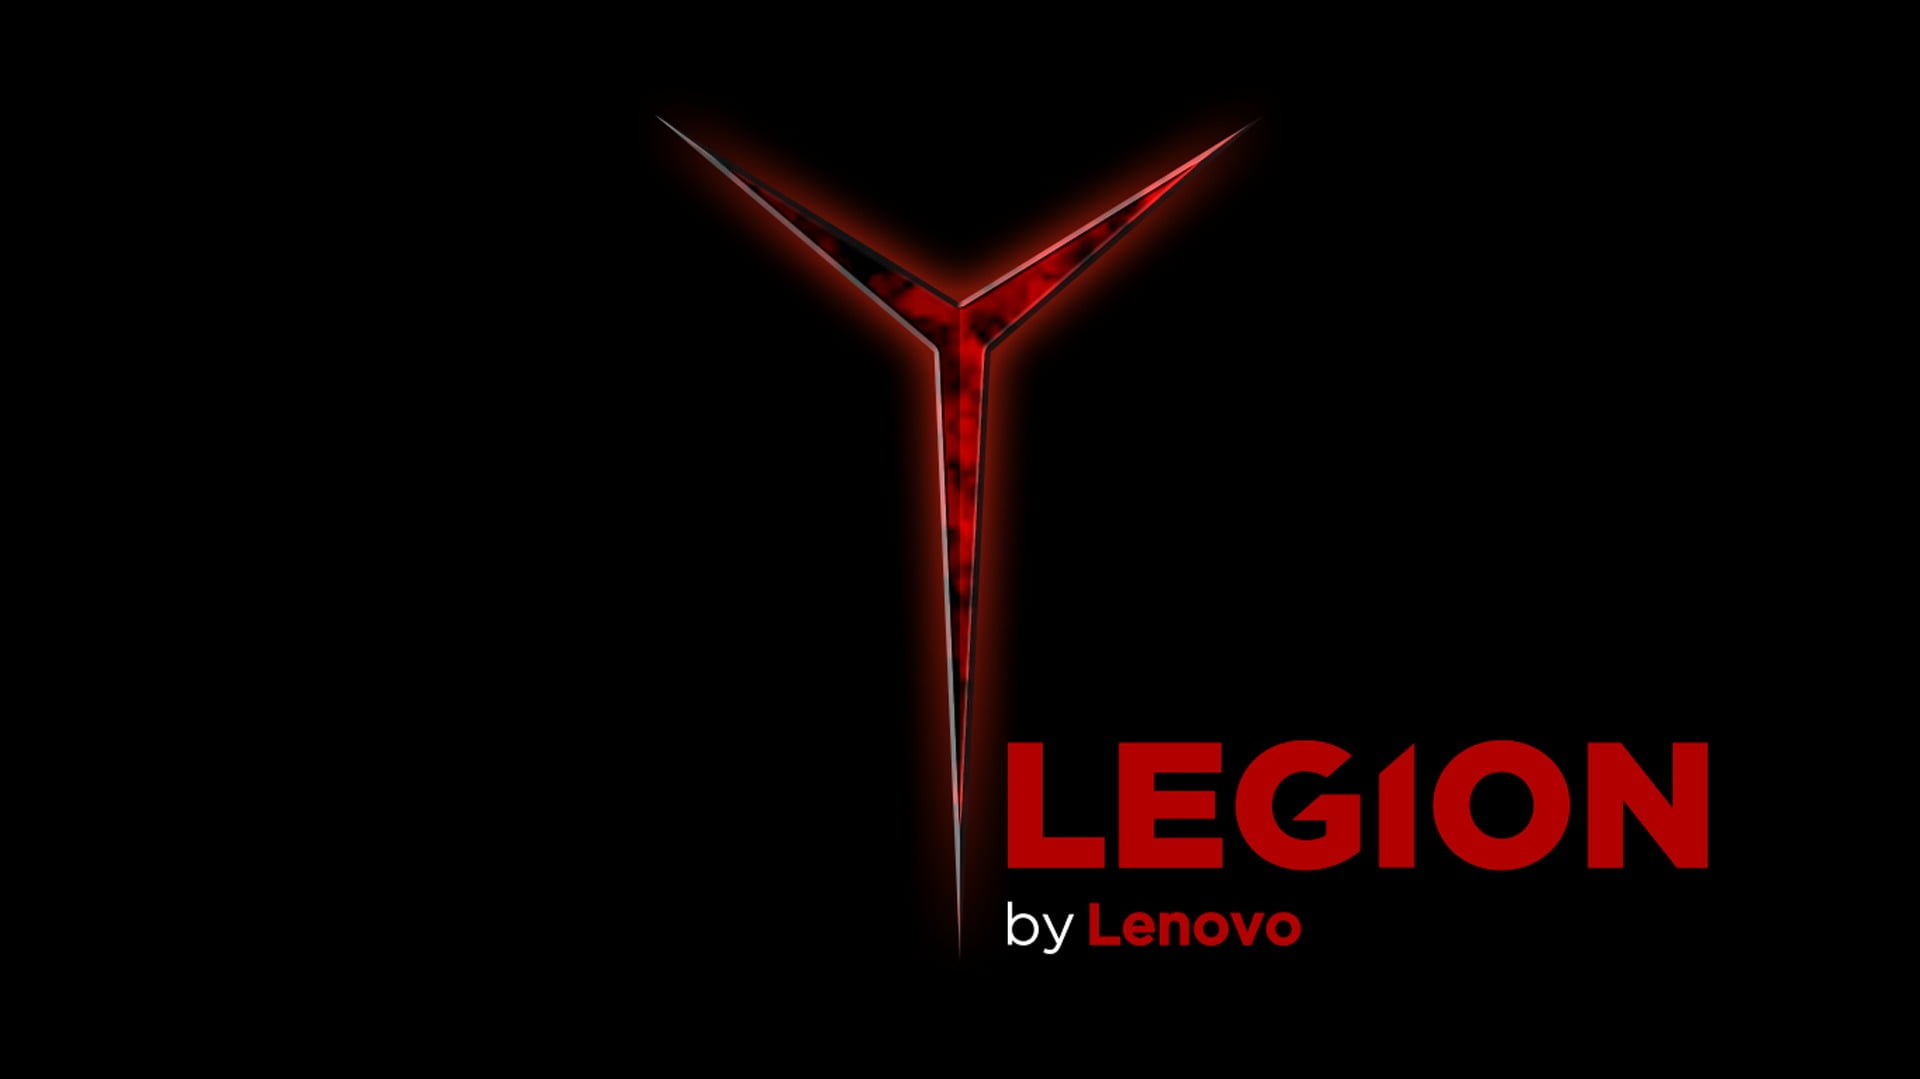 Lenovo wallpaper, lenovo legion, PC gaming, red, illuminated, black background